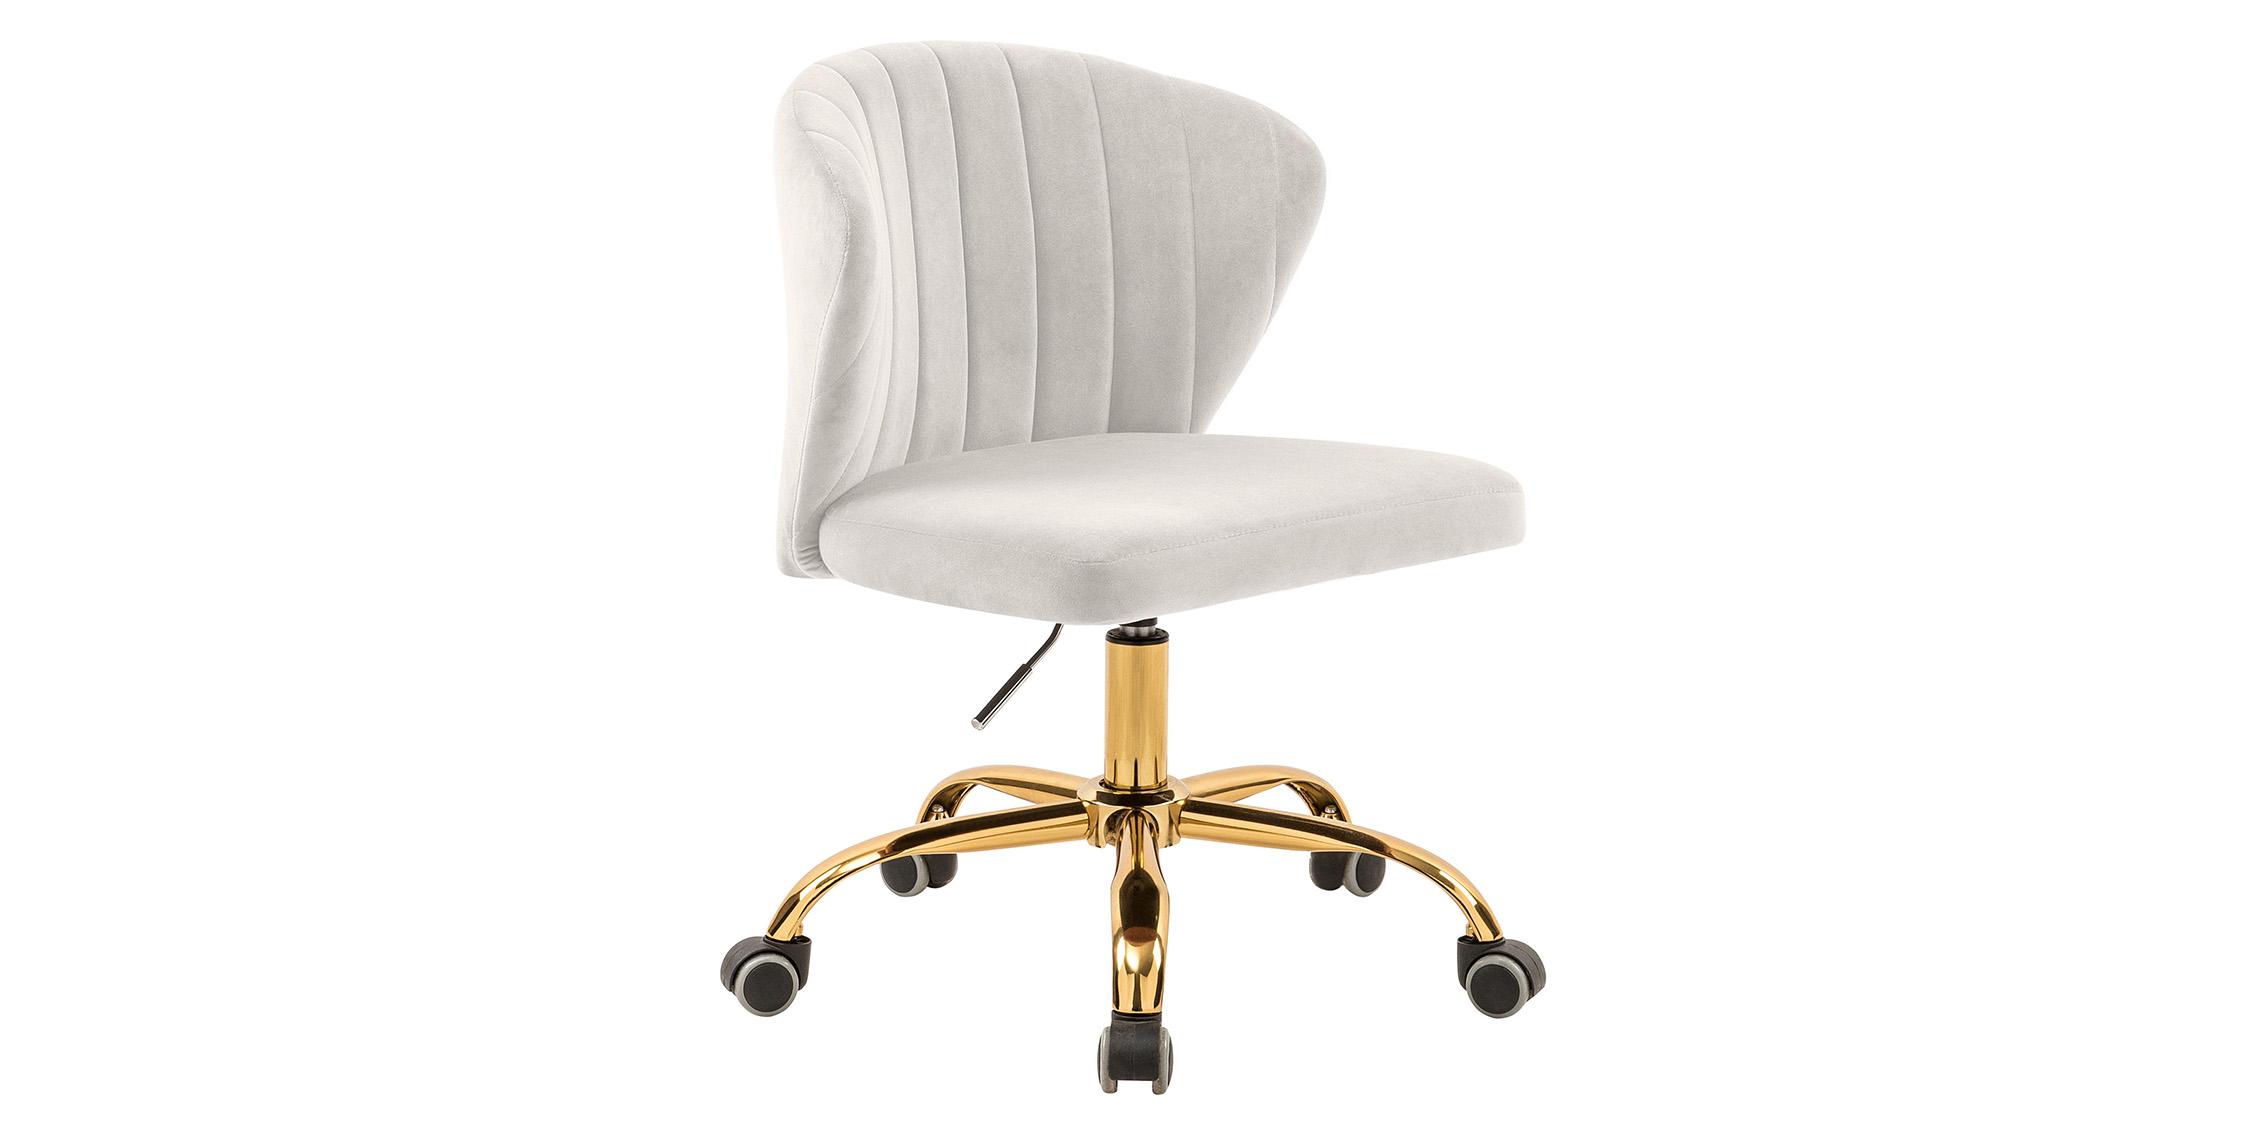 Contemporary, Modern Office Chair FINLEY 165Cream 165Cream in Cream, Gold Fabric